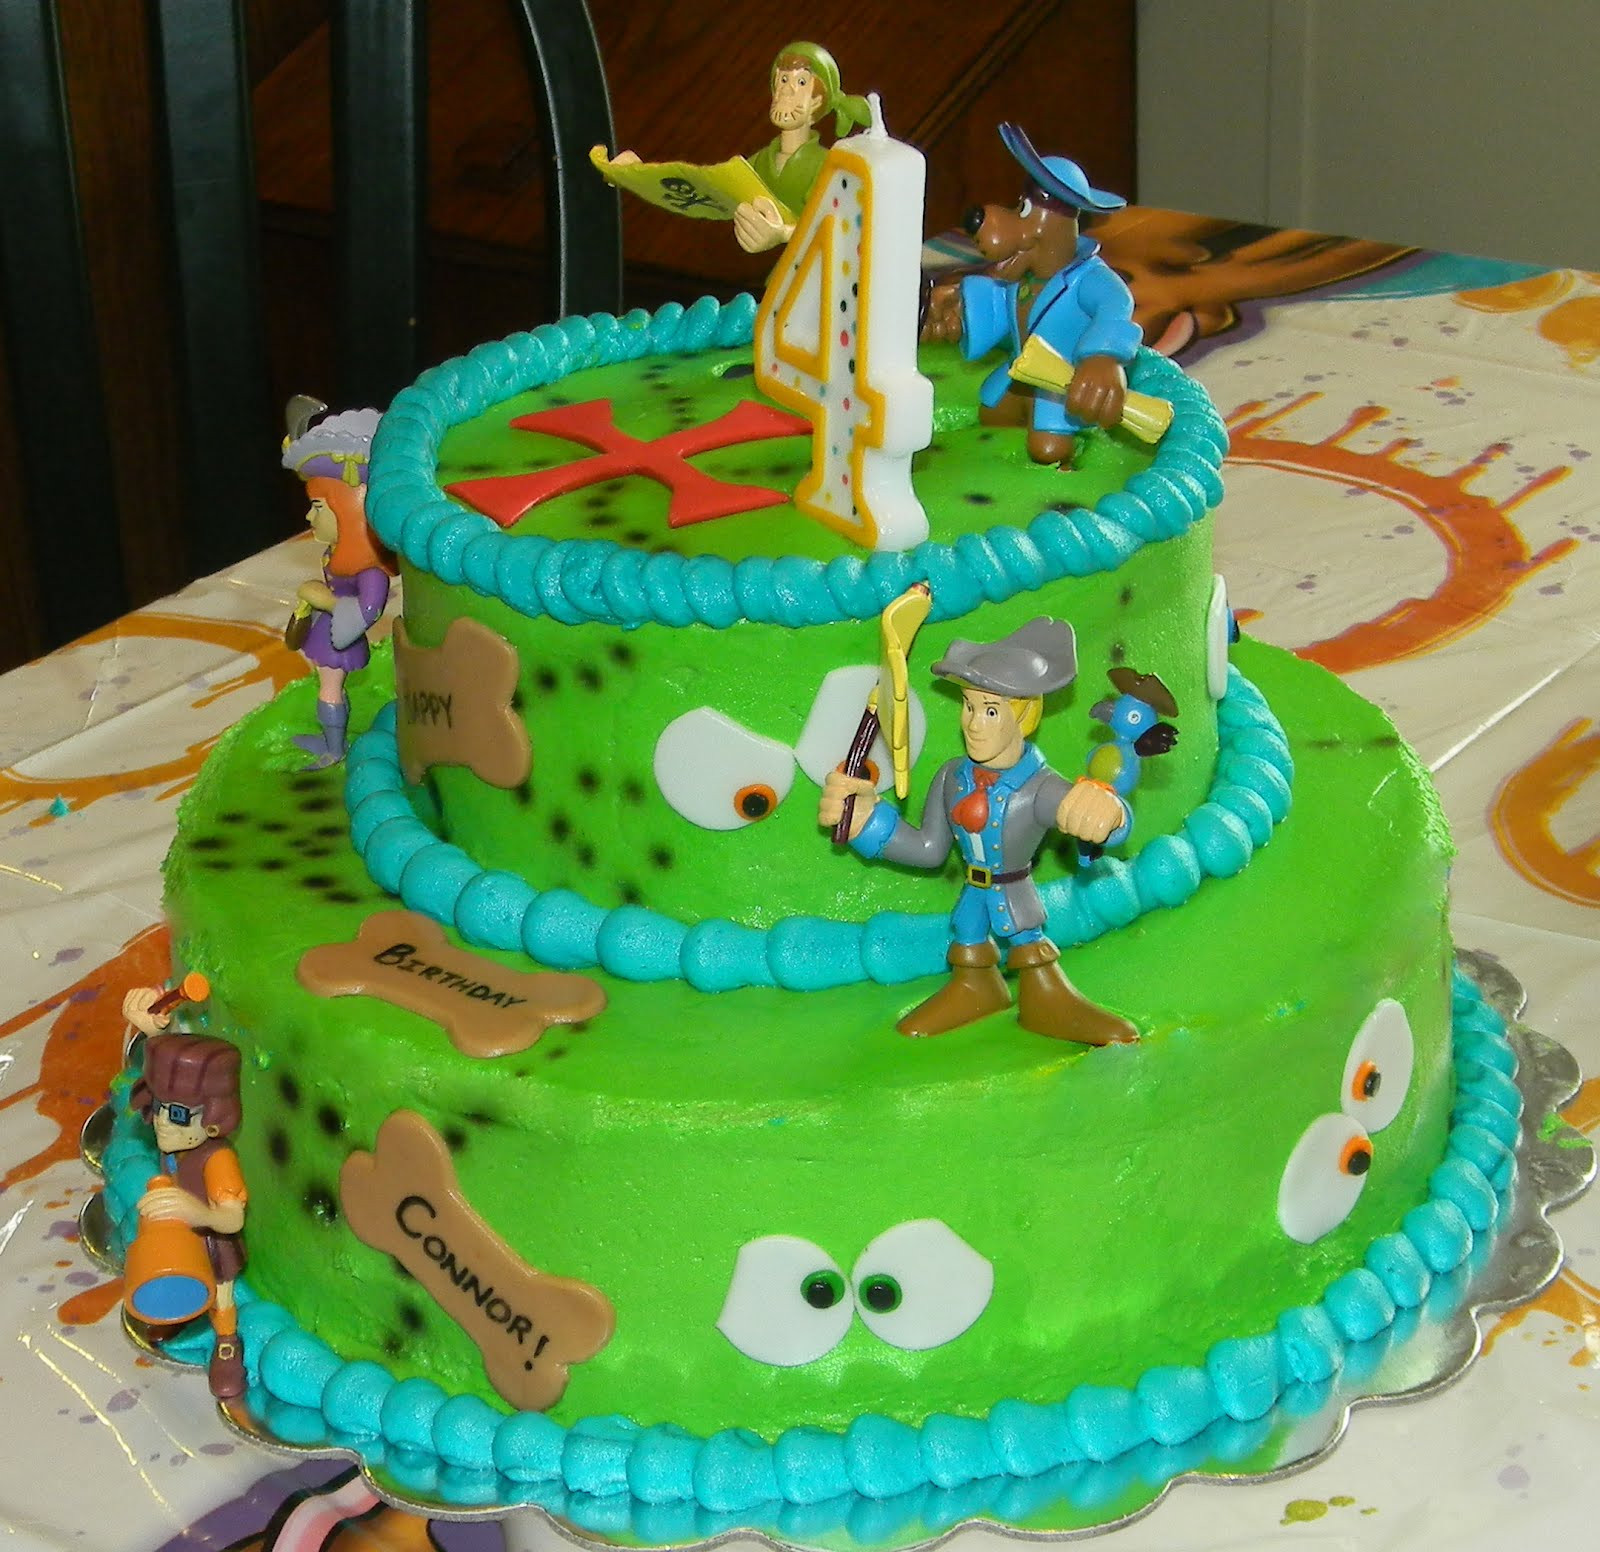 Scooby Doo Birthday Cake
 Custom Cakes by Christy Scooby Doo Birthday Cake